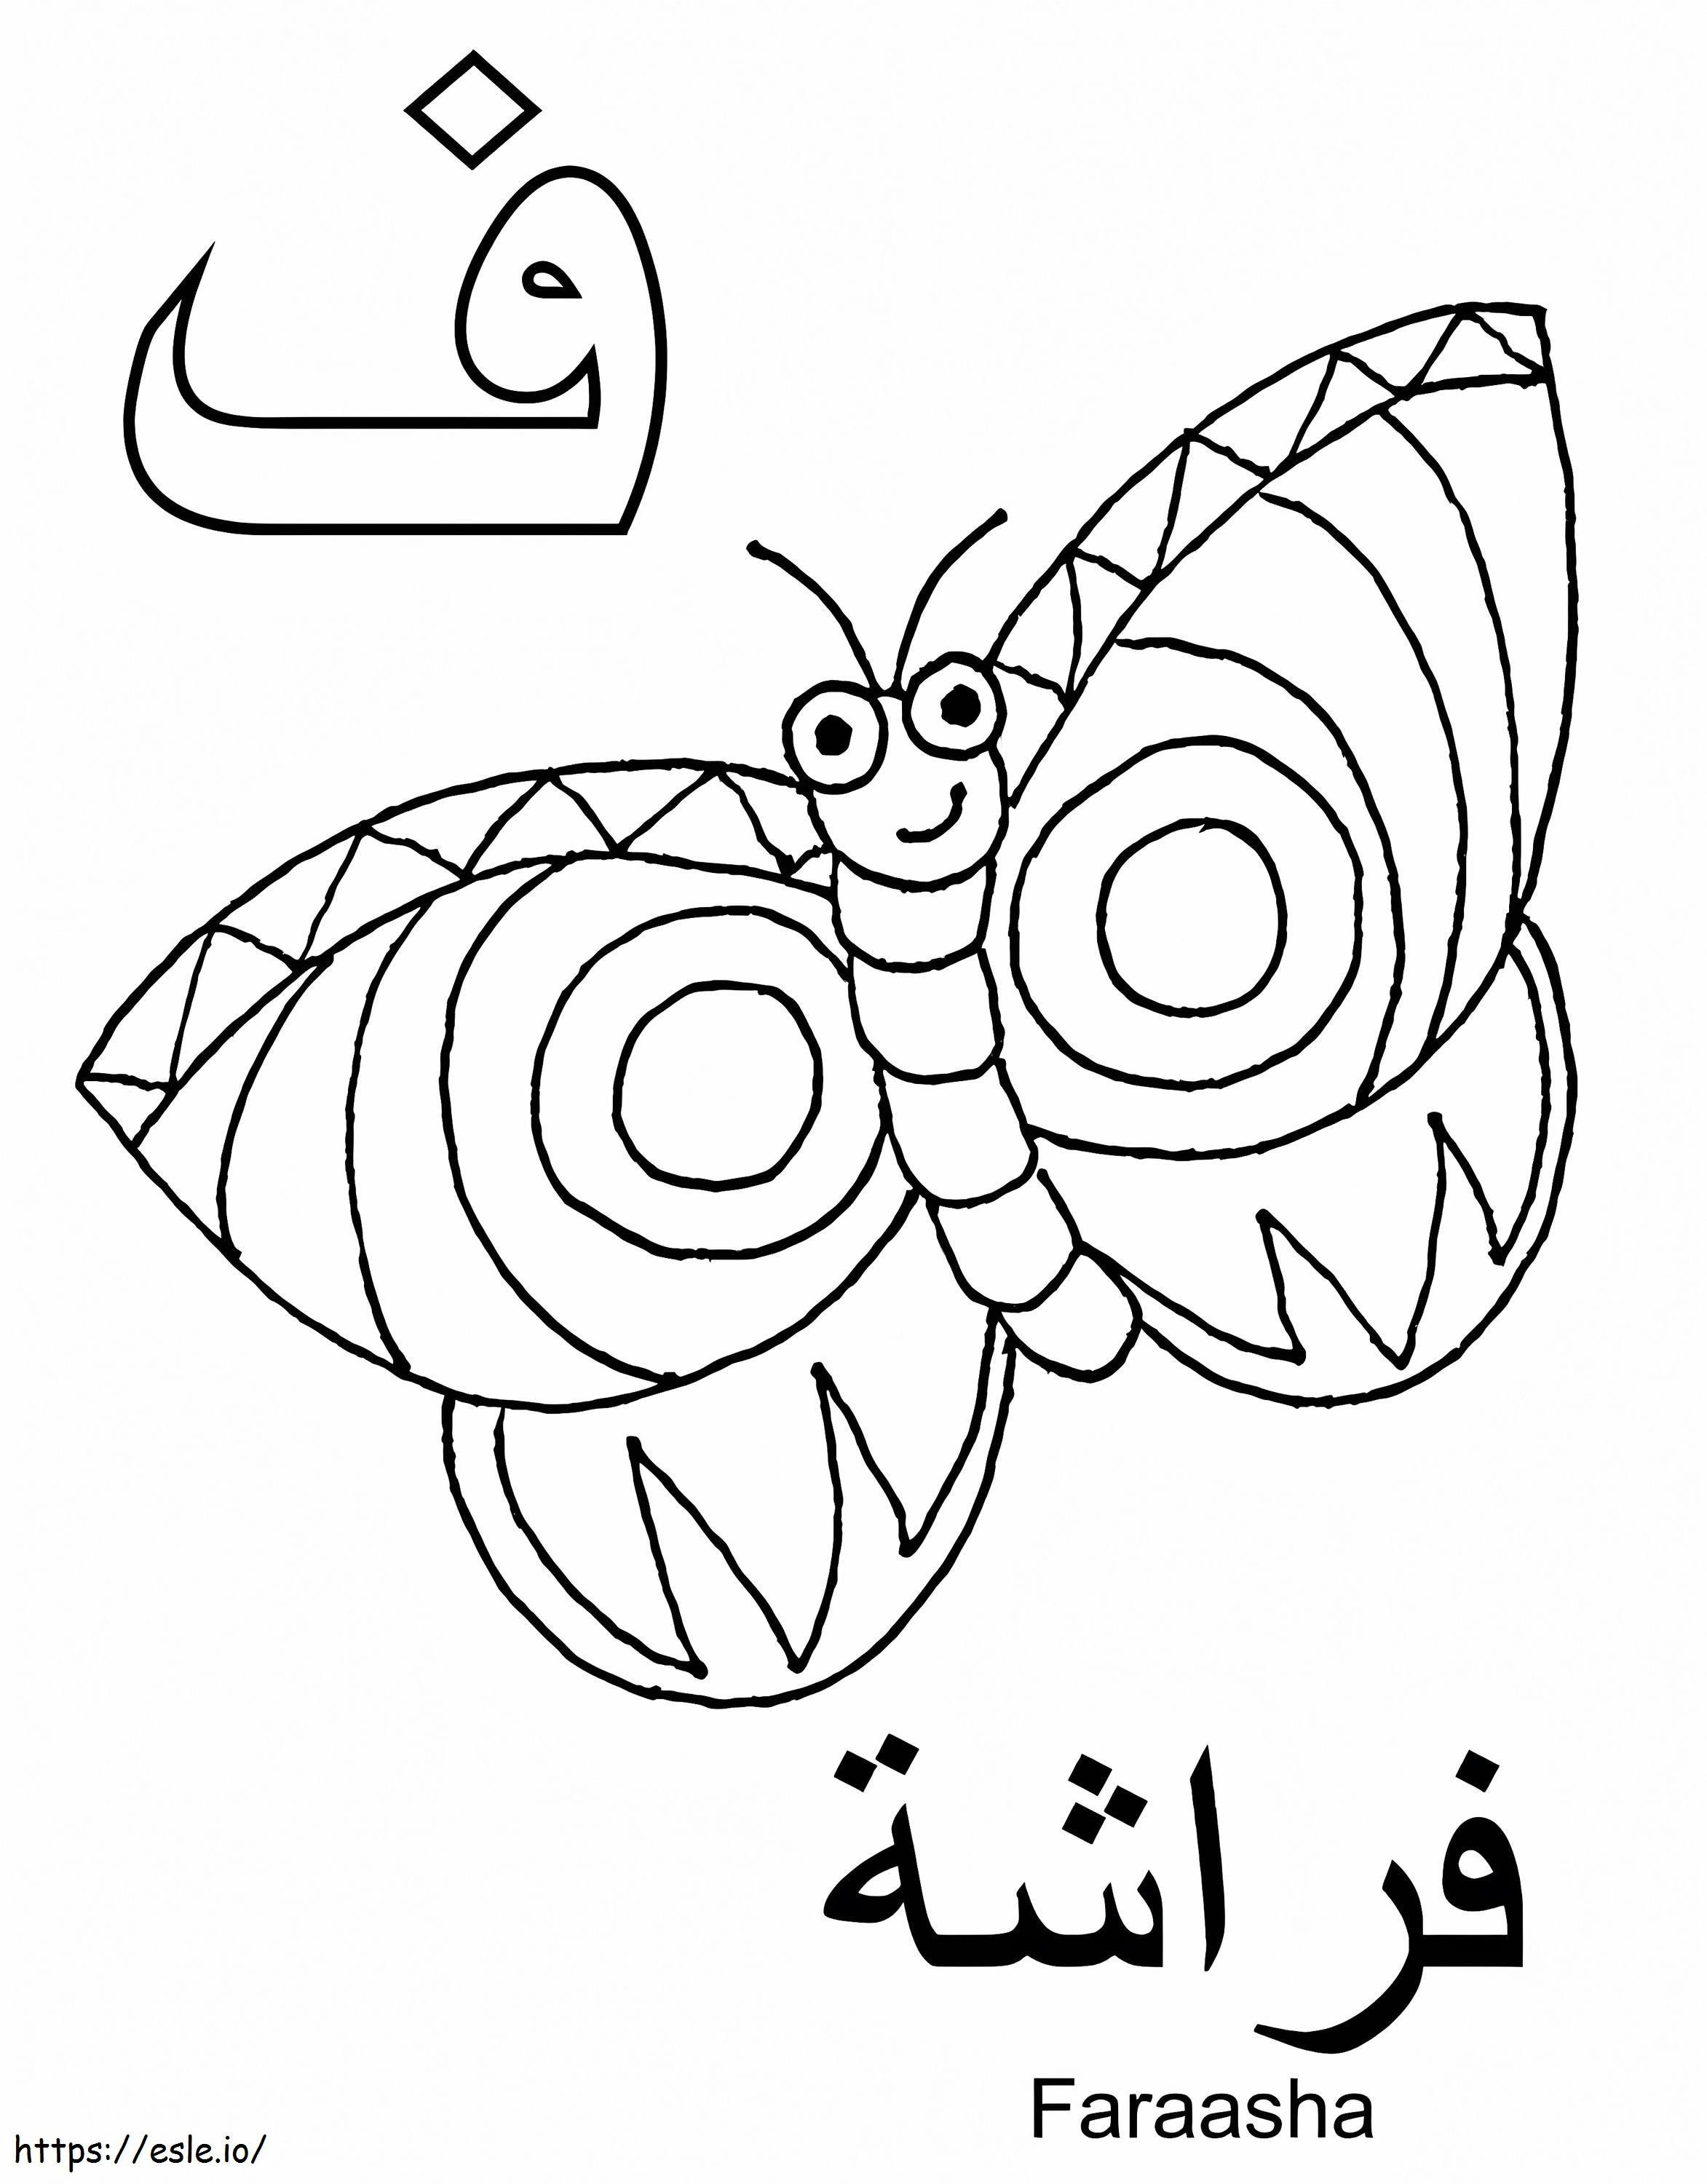 Alfabeto arabo Faraasha da colorare